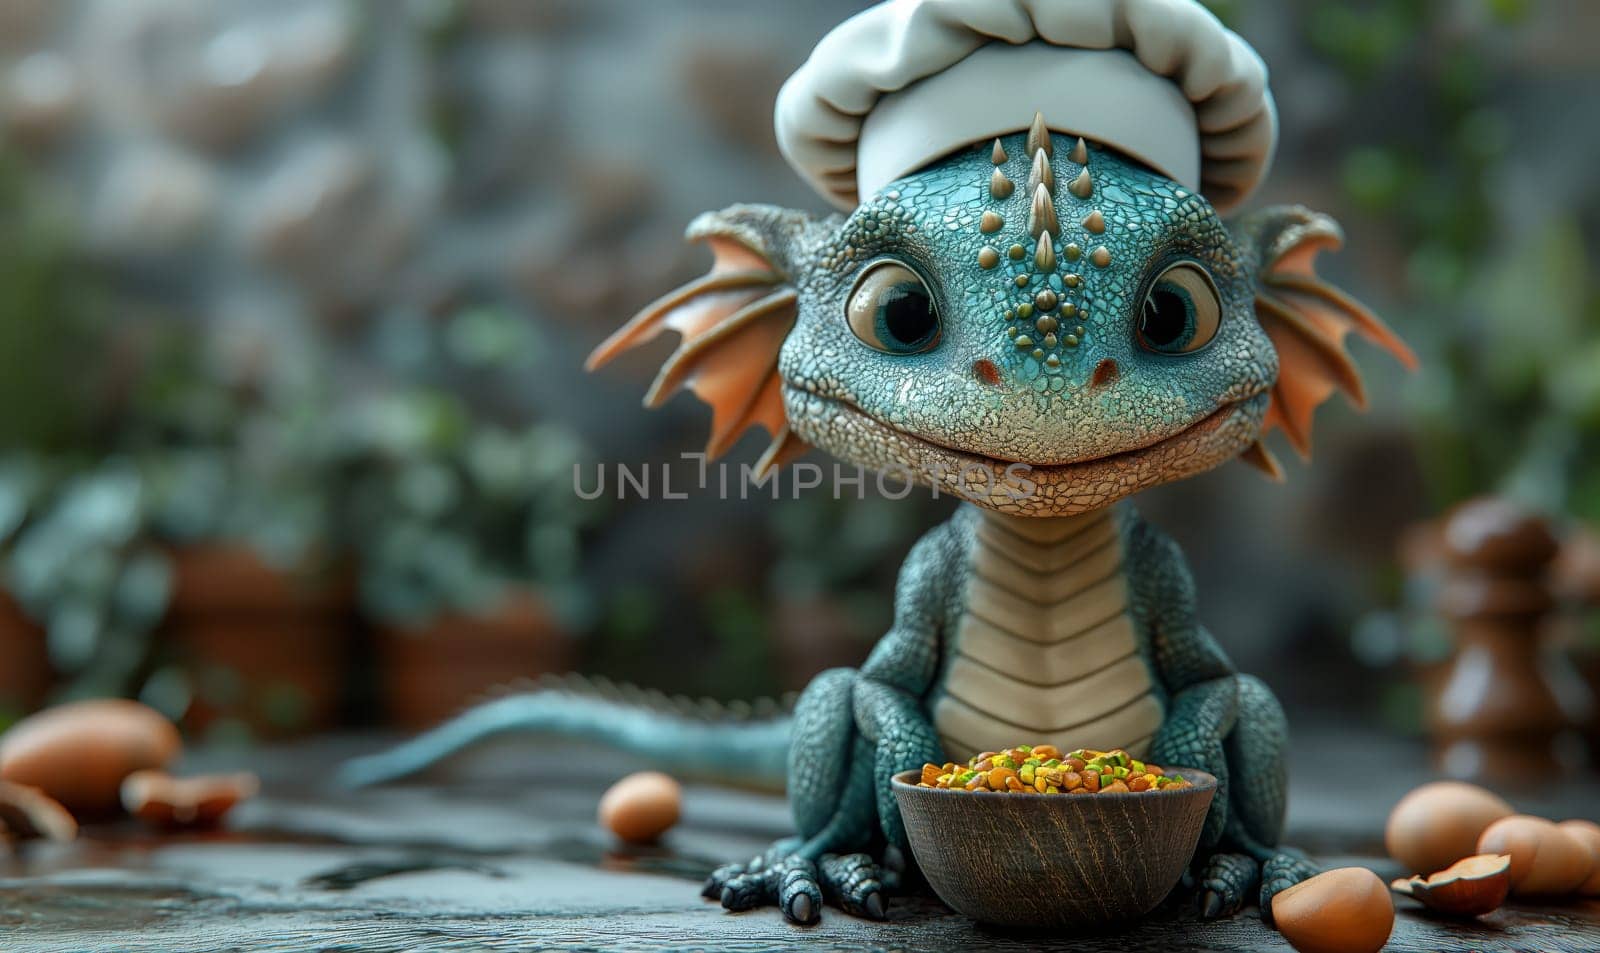 Illustration of a baby dragon preparing food. Selective soft focus.